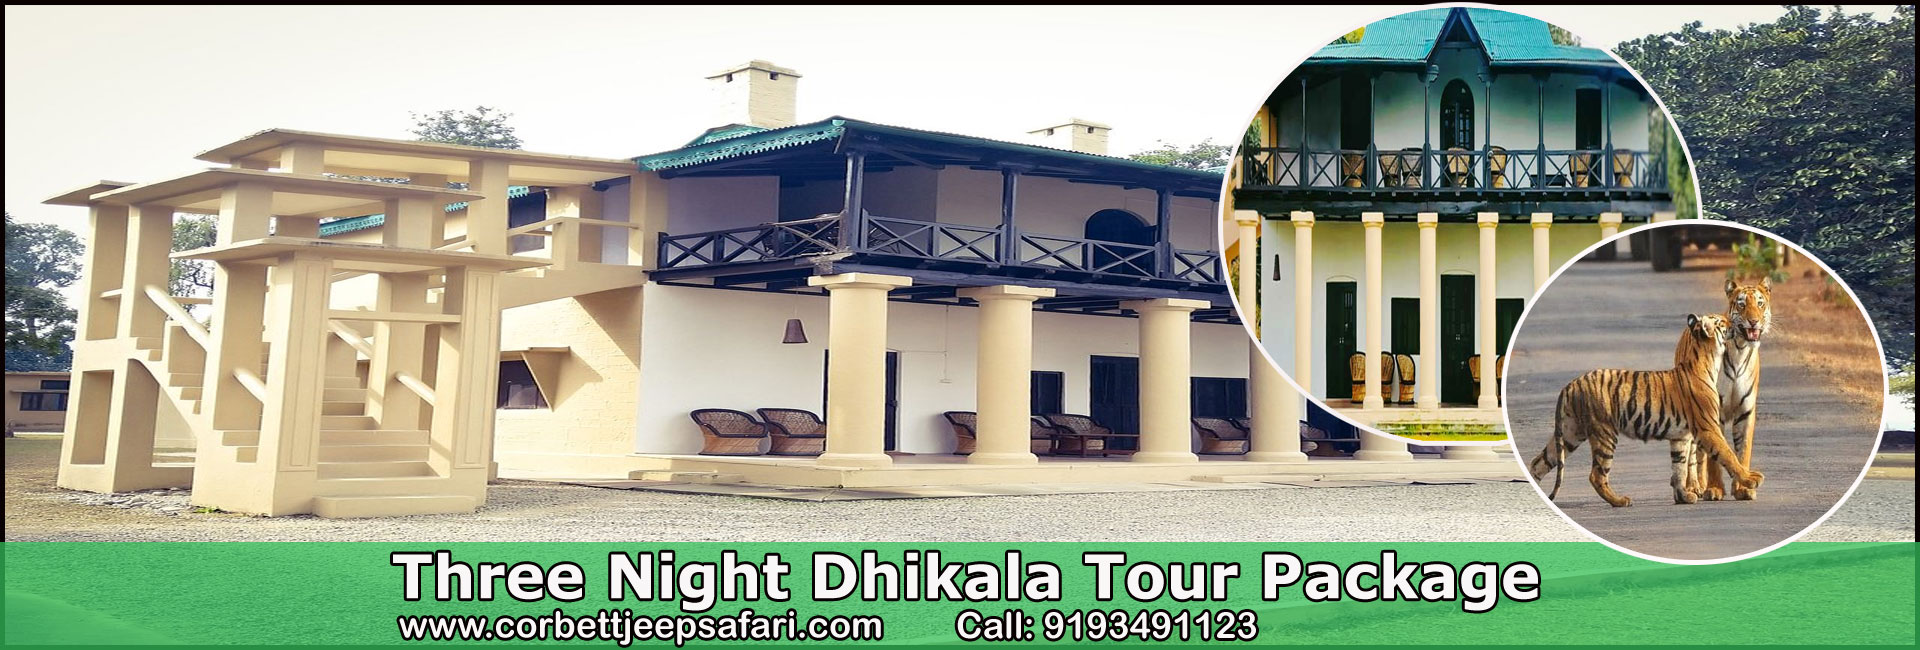 Three Night Dhikala Tour Package